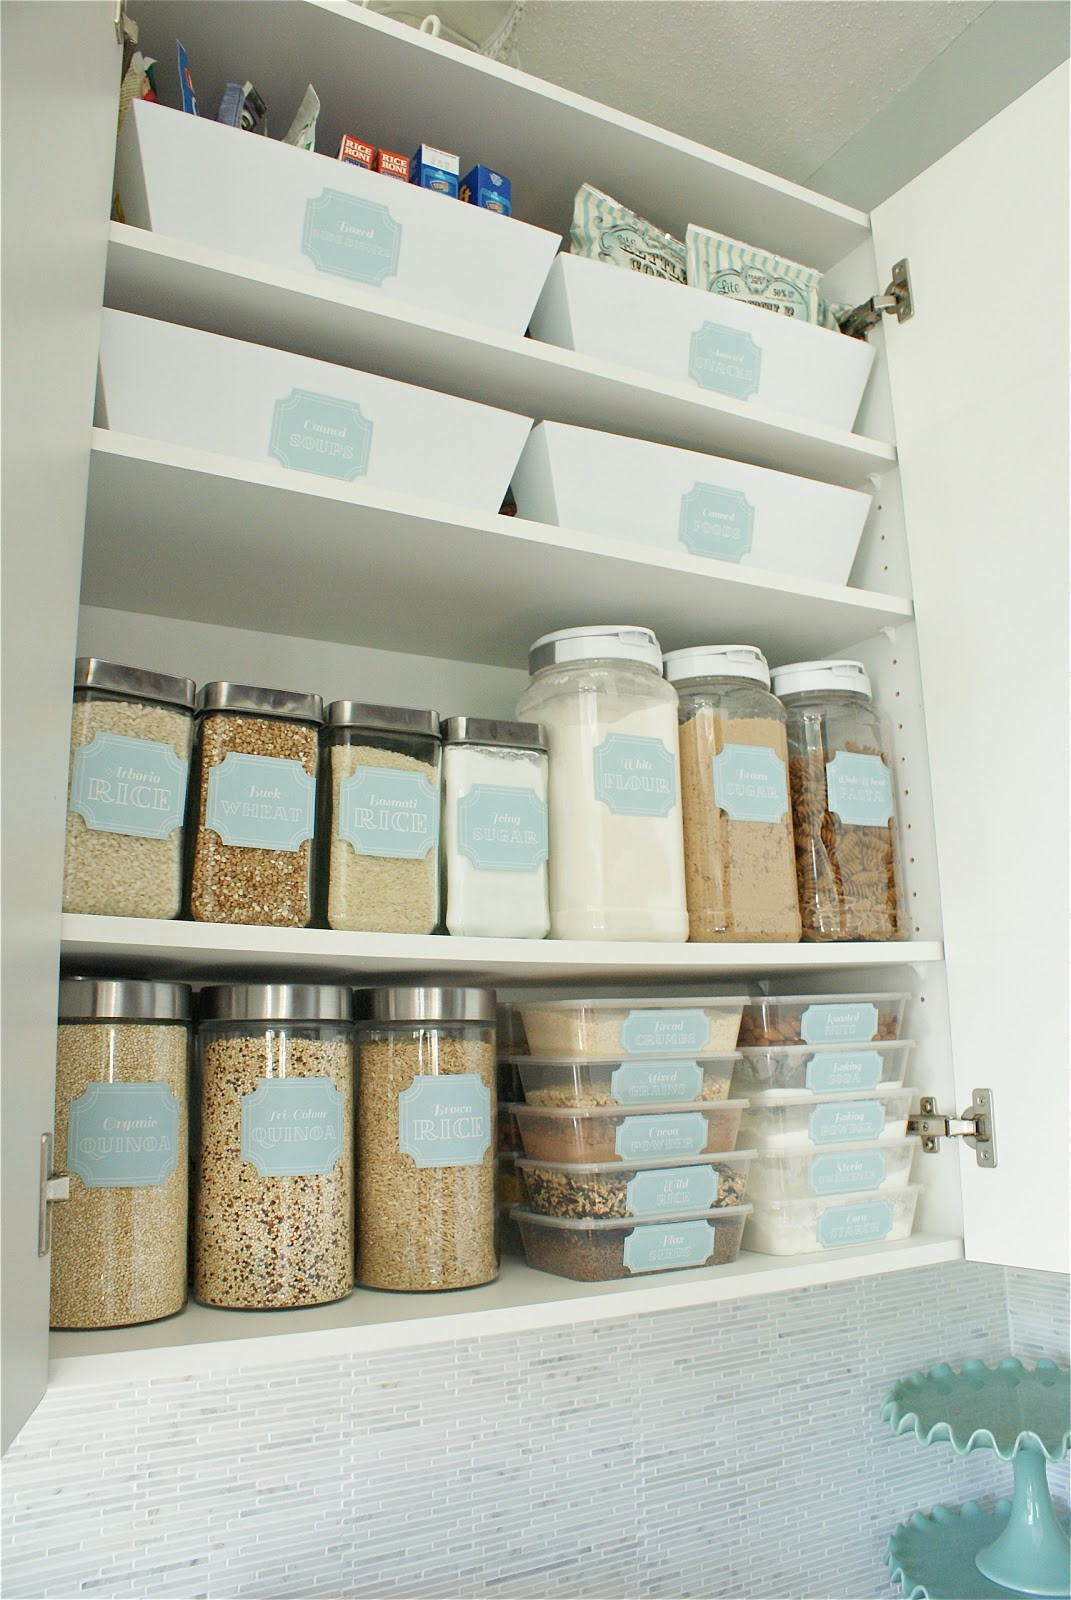 Best ideas about Kitchen Organizer Ideas
. Save or Pin Home Kitchen Pantry Organization Ideas Mirabelle Now.